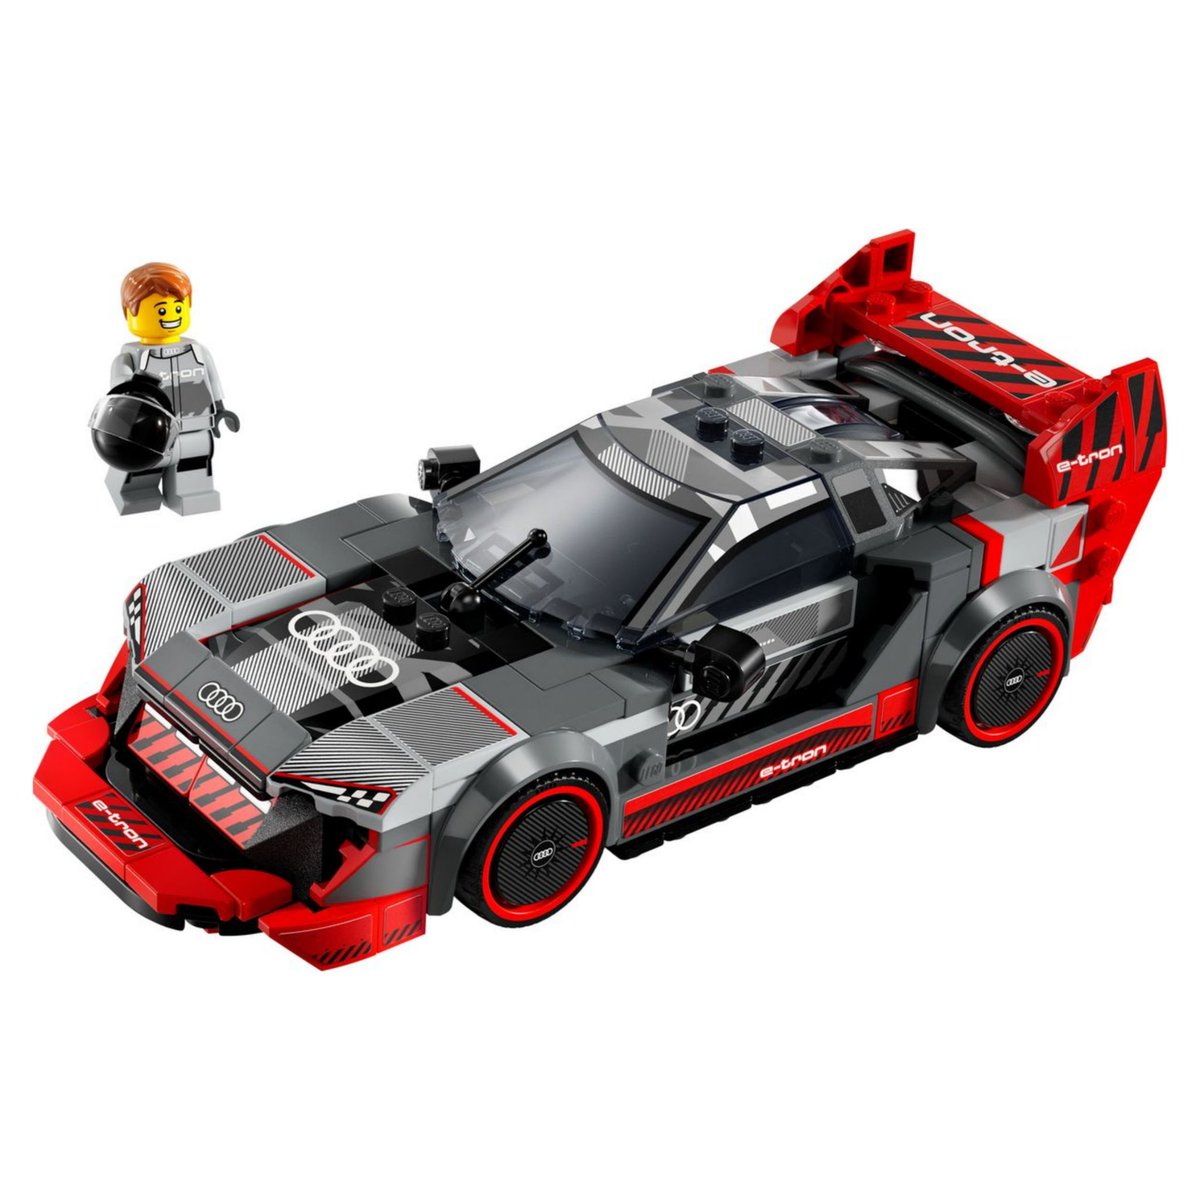 New LEGO Speed Champions Audi S1 e-tron revealed!

Release: March 1st
Price: $26.99
Pieces: 274

#legonews #legoleaks #lego #racing #audi #kenblock